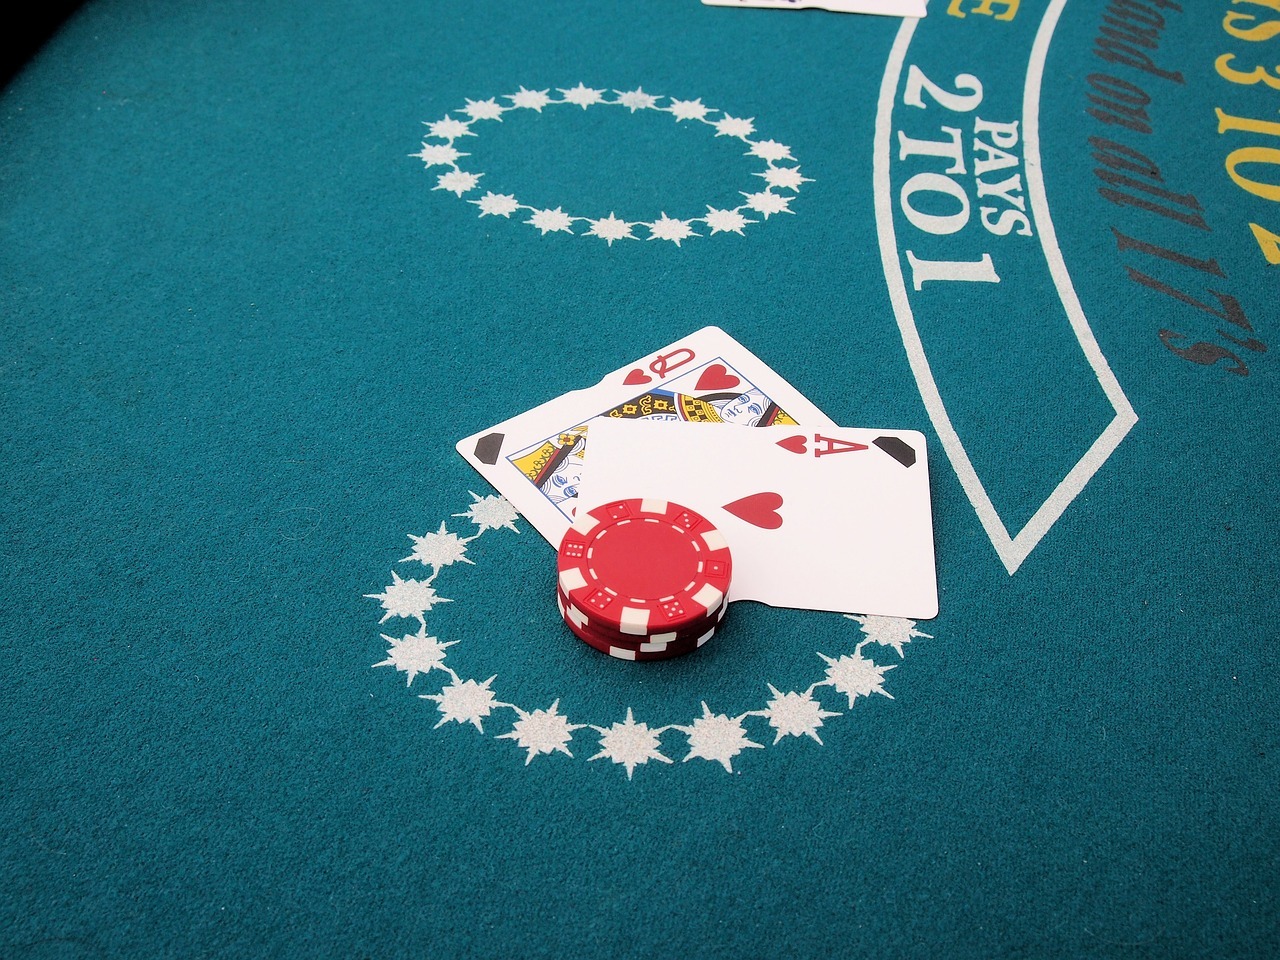 is blackjack rigged in casinos